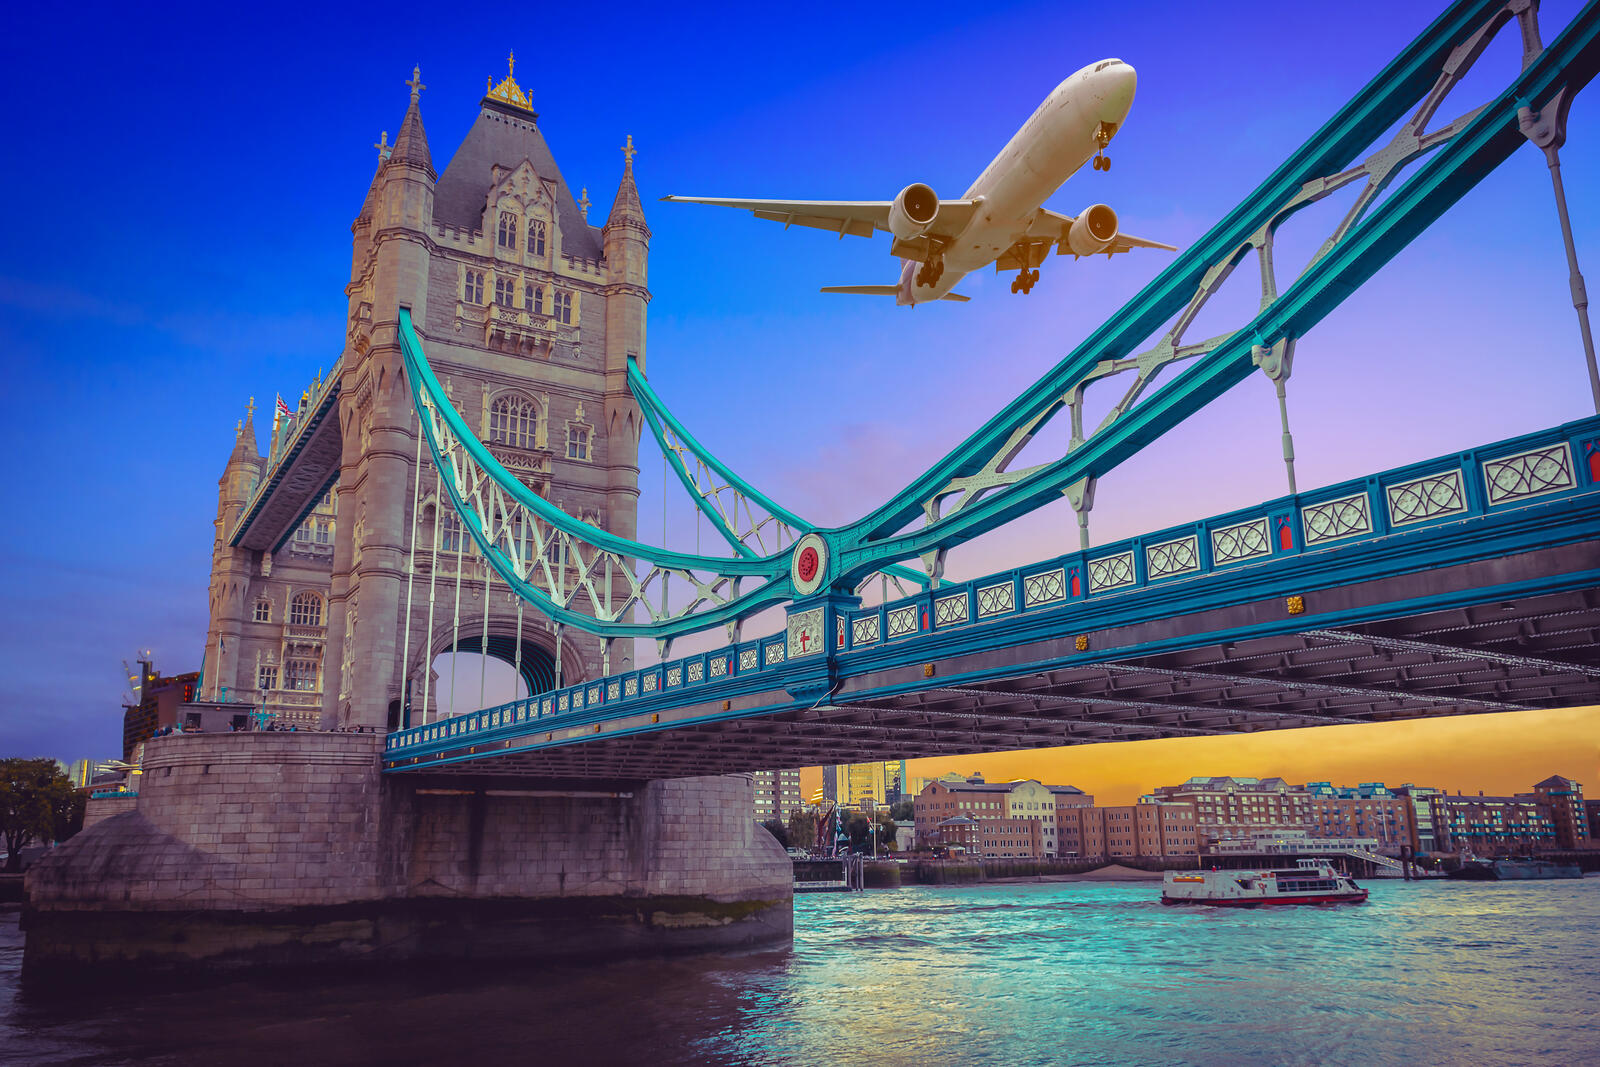 Wallpapers Plane flying over Tower Bridge at sunset in London London UK on the desktop